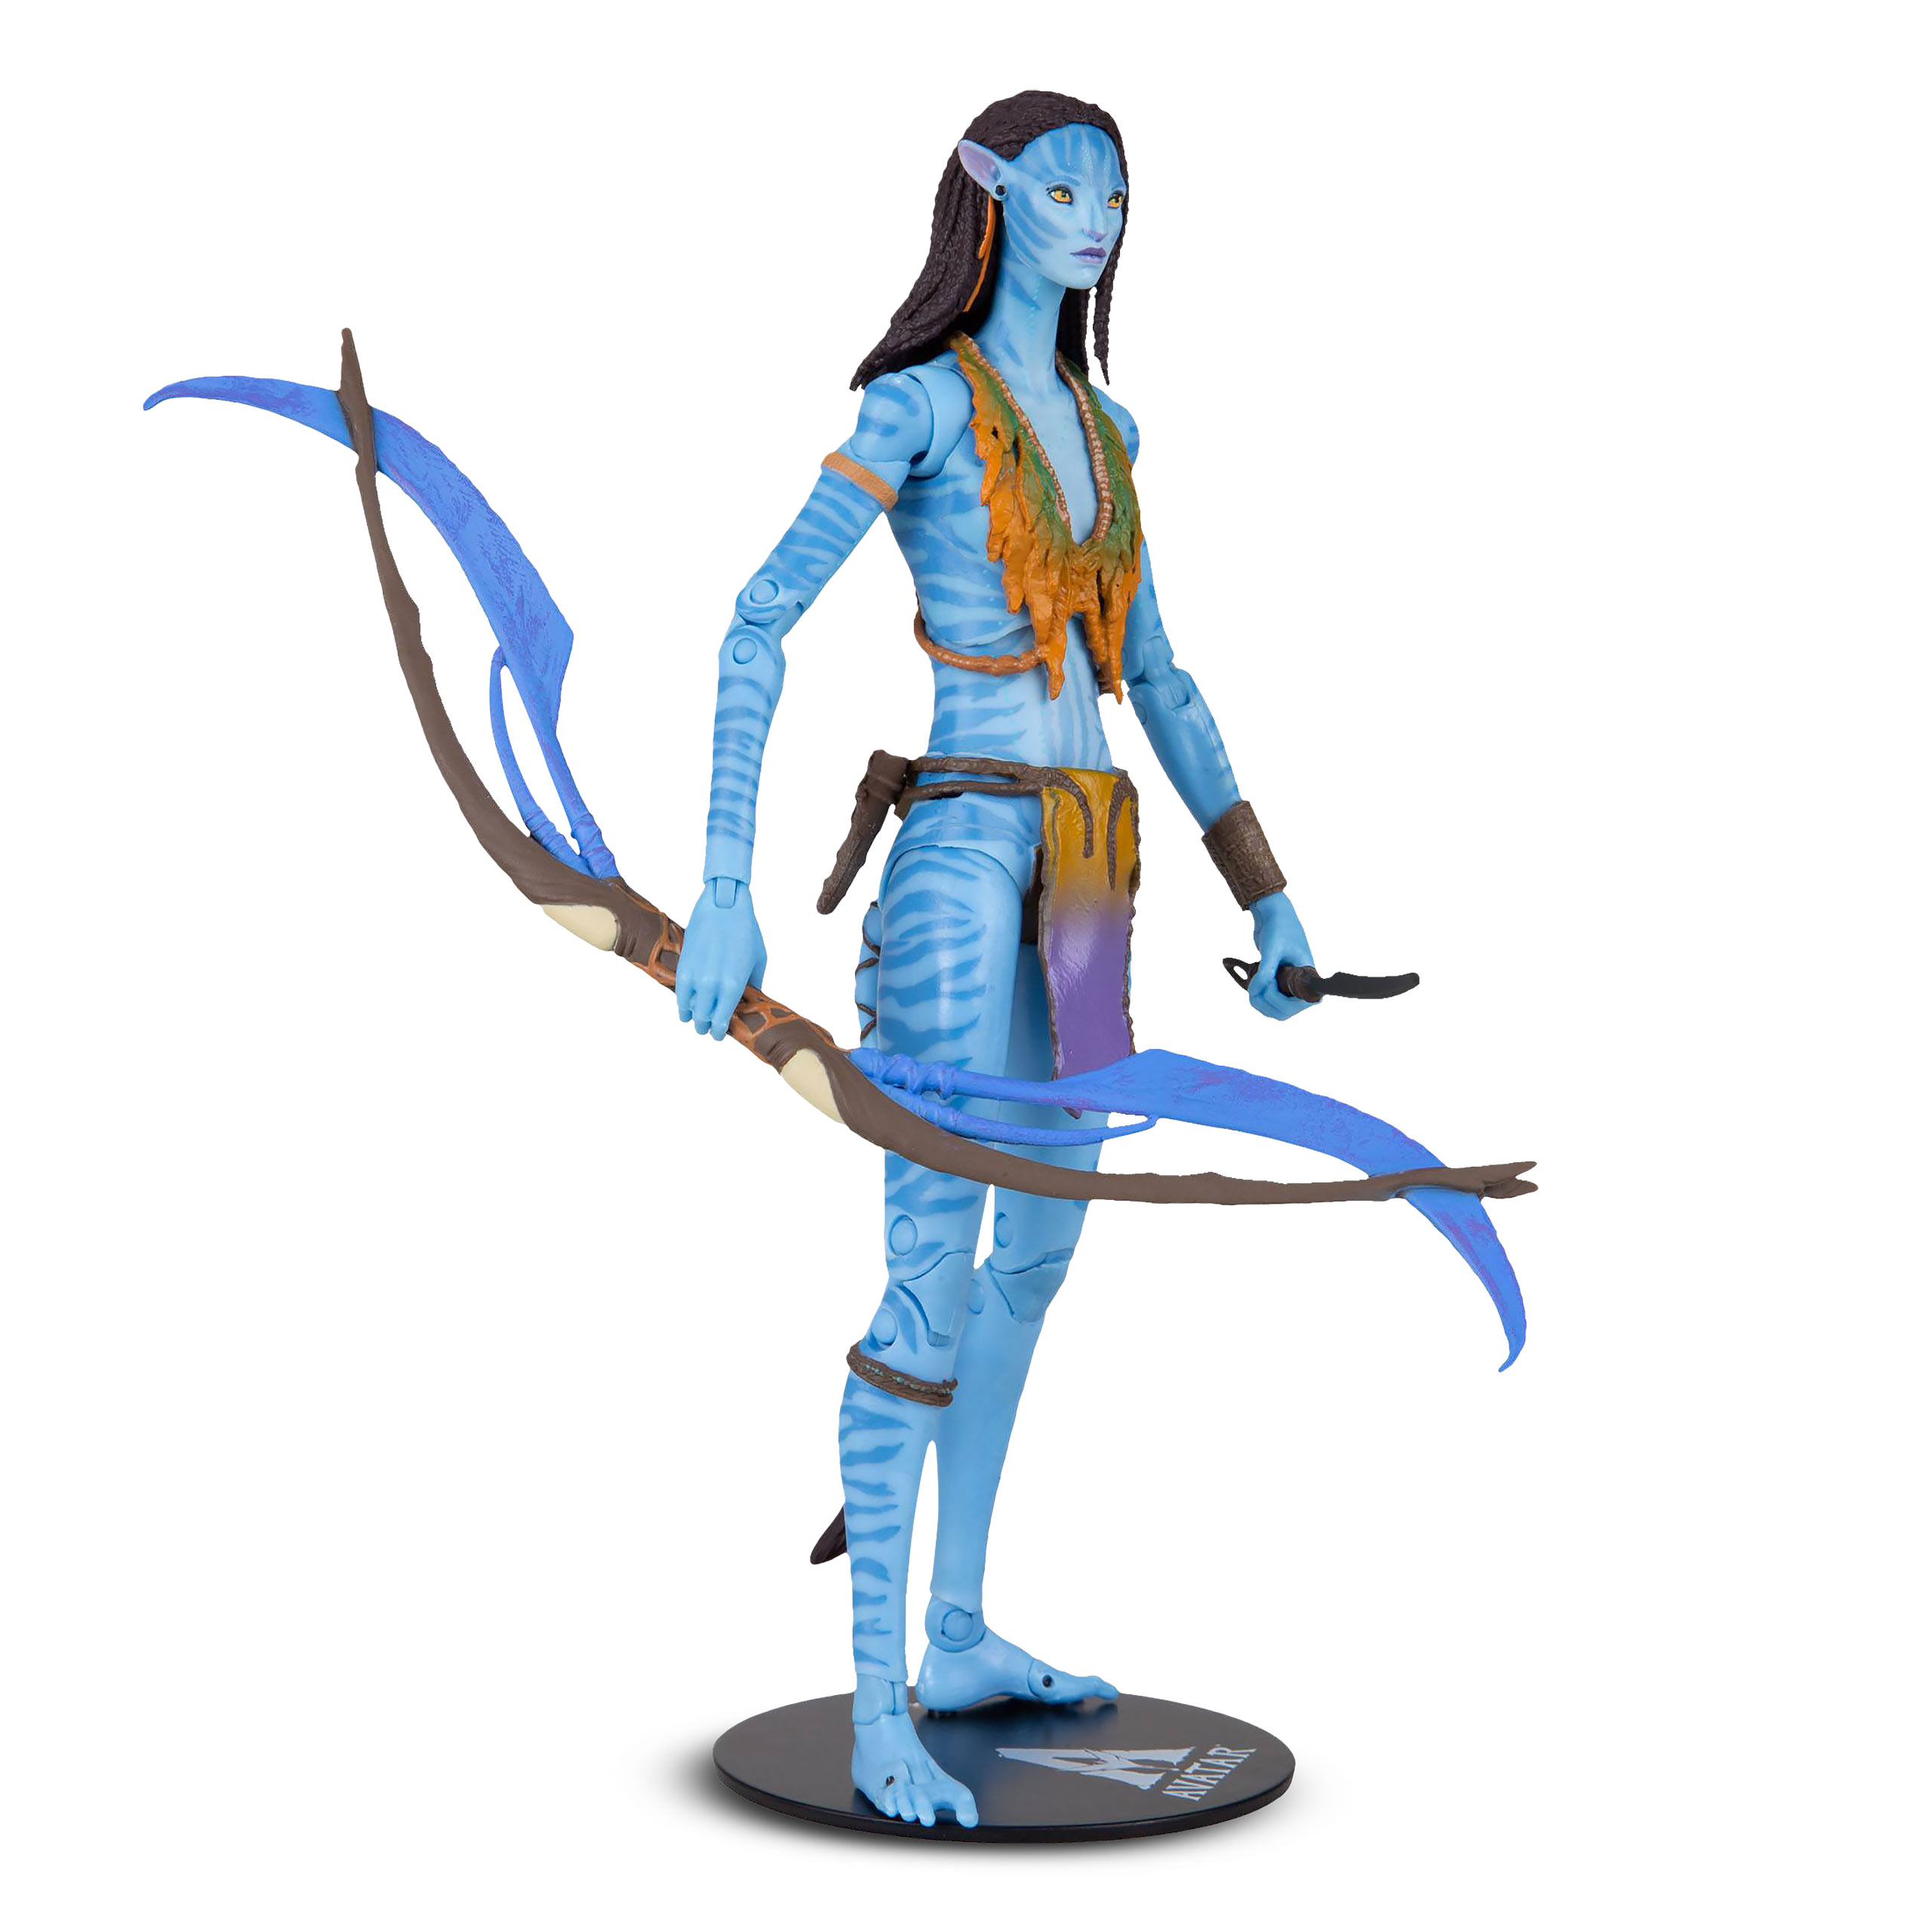 Avatar: The Way of Water - Neytiri Figurine Lumineuse dans le Noir